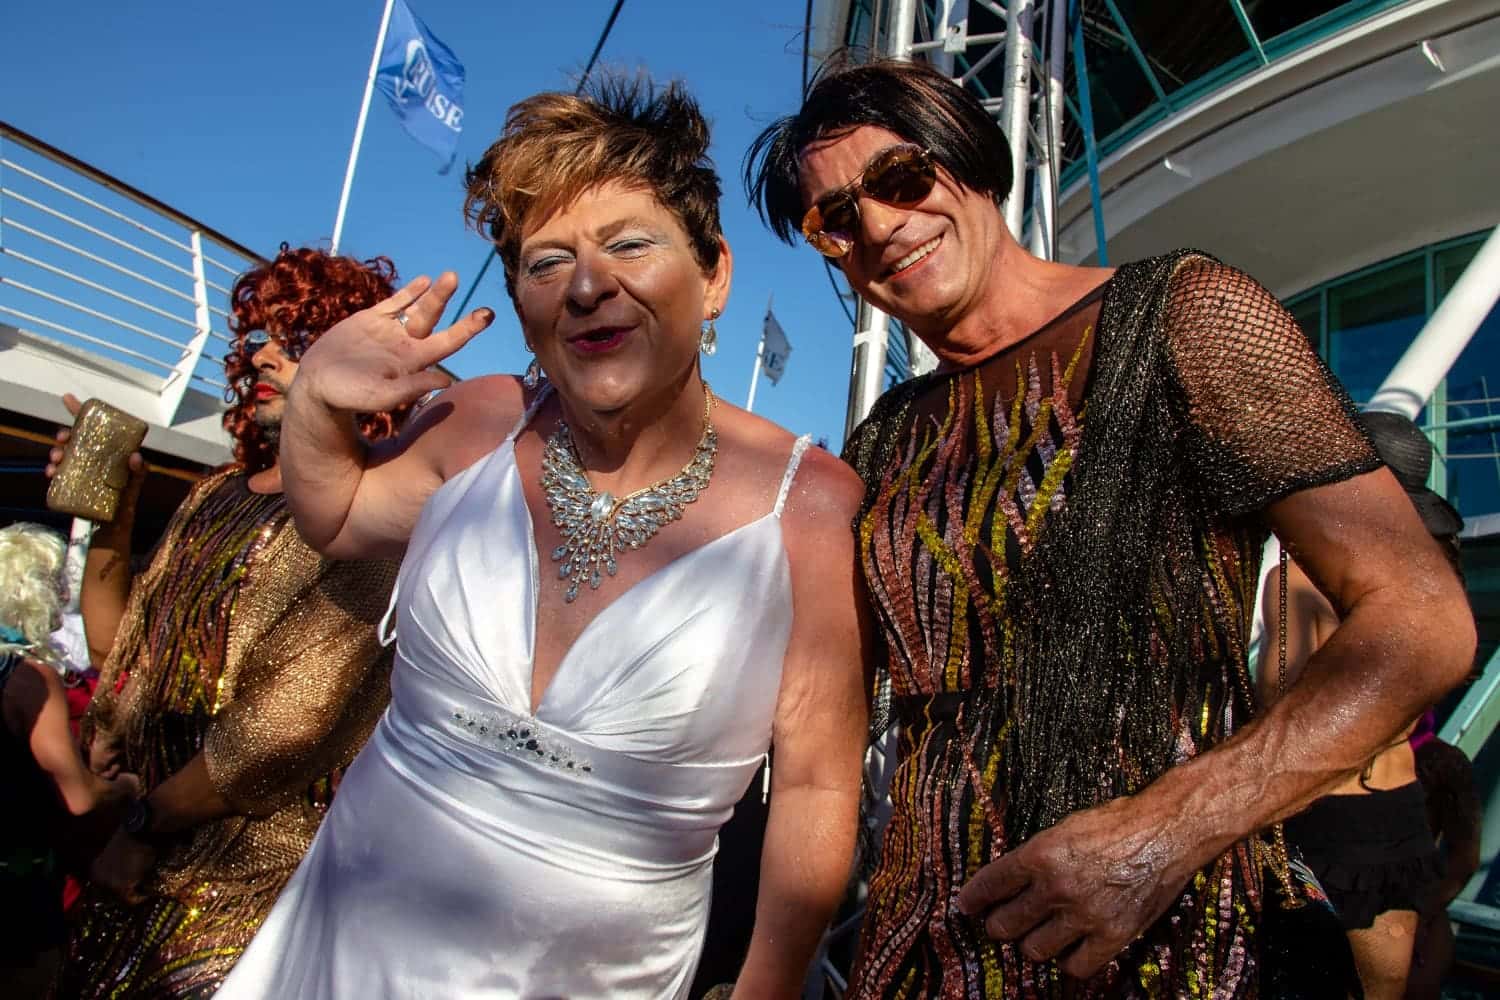 Men in drag on La Demence gay cruise ship